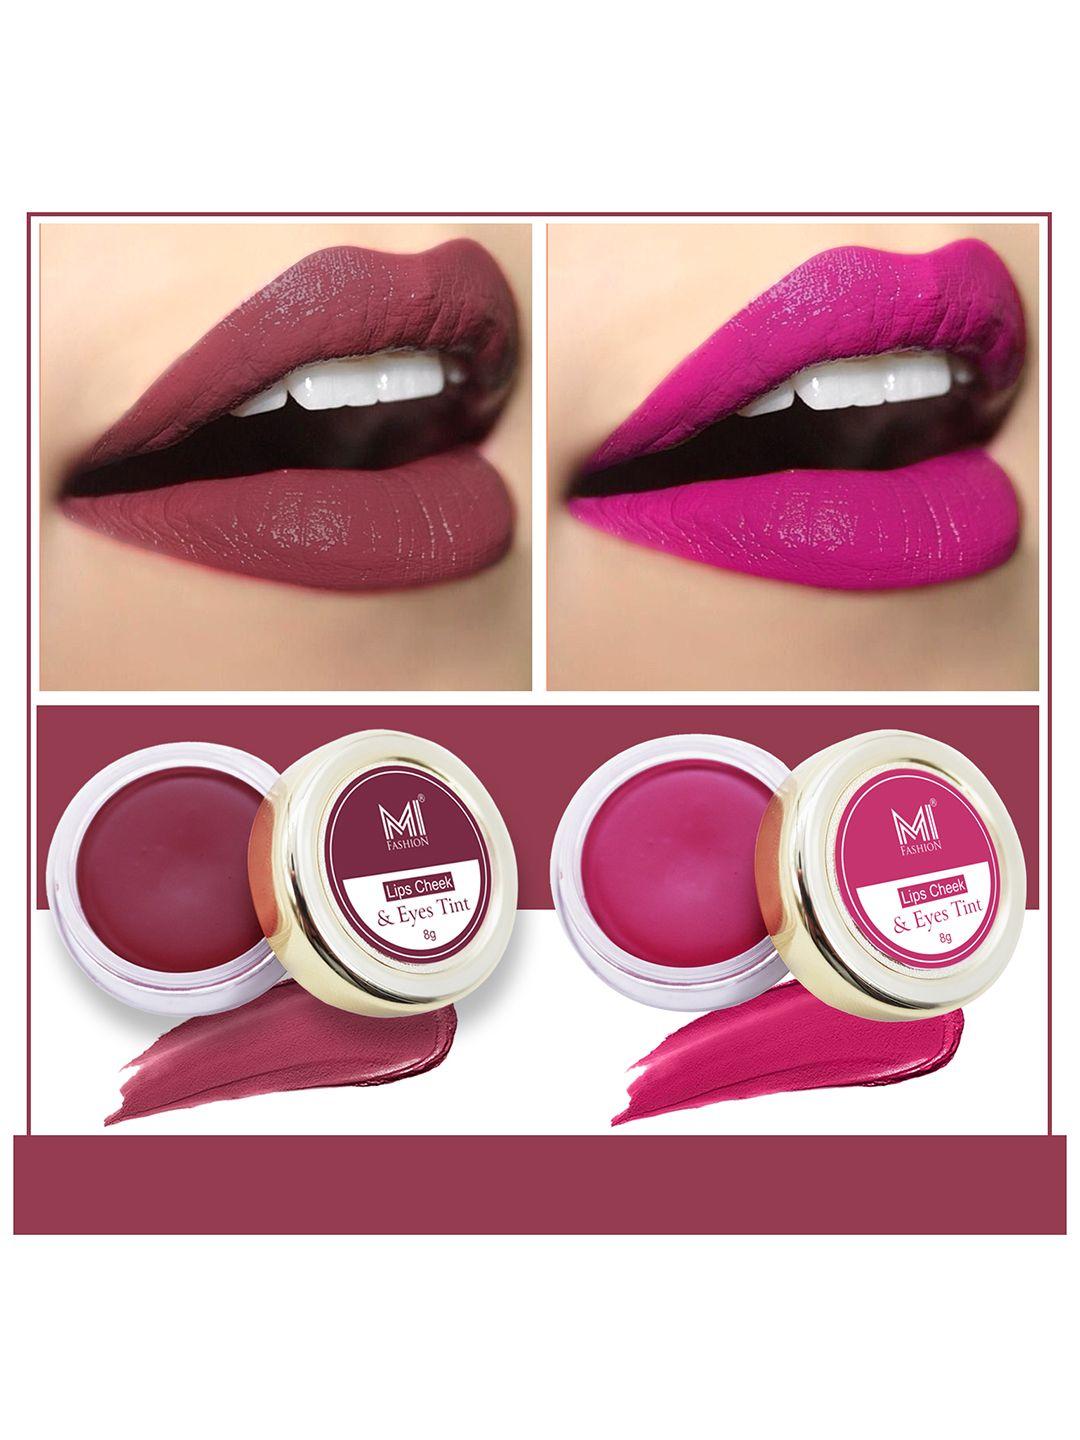 mi fashion set of 2 natural 3 in 1 lips cheek & eyes tint 8g each- beetroot & magenta pink